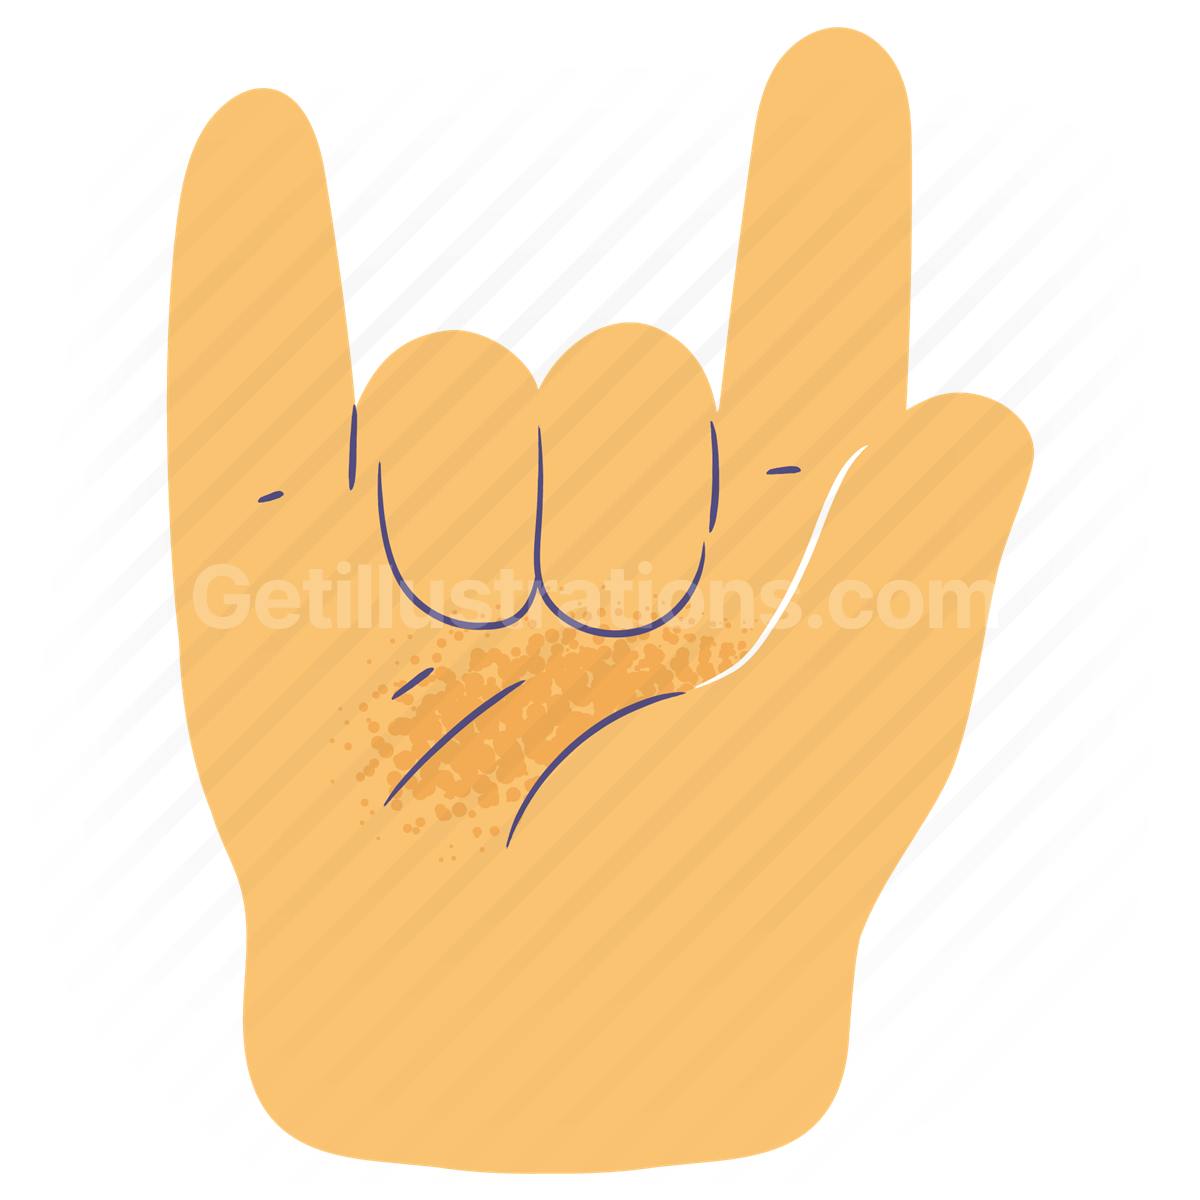 hand gesture, gesture, hand, sign, language, letters, alphabet, rock, gesturing